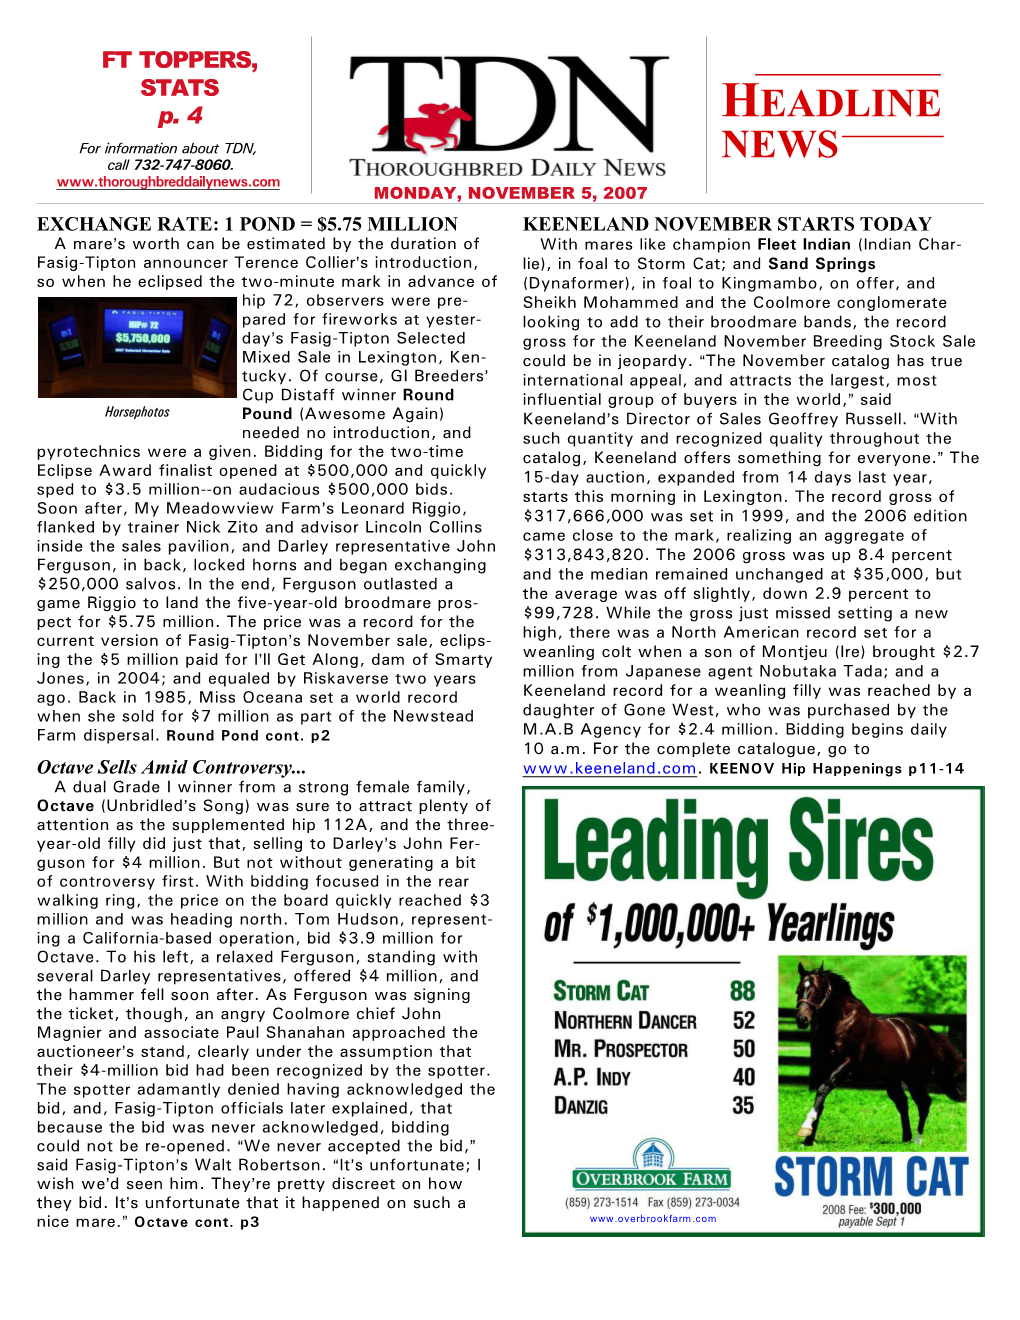 HEADLINE NEWS • 11/5/07 • PAGE 2 of 19